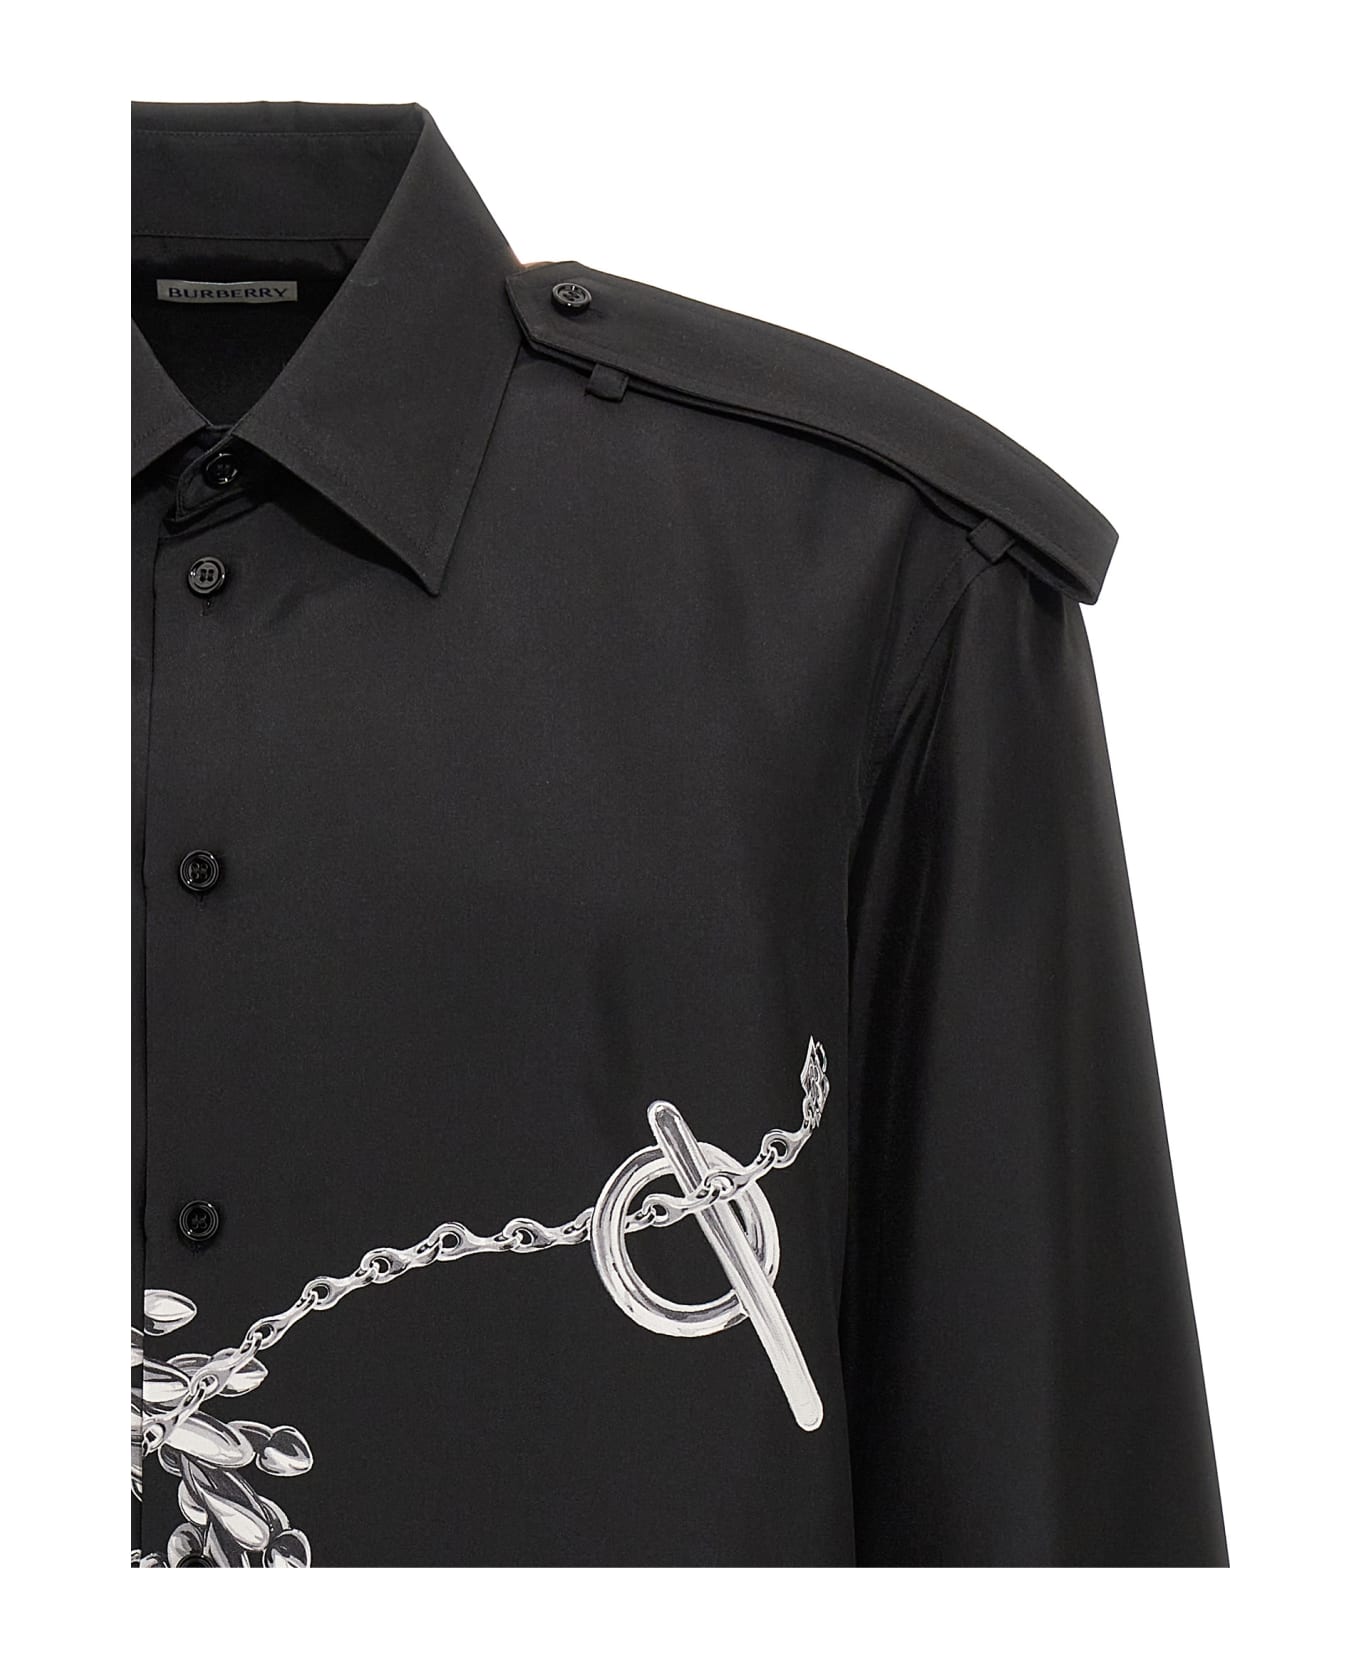 Burberry 'knight' Shirt - Black   シャツ